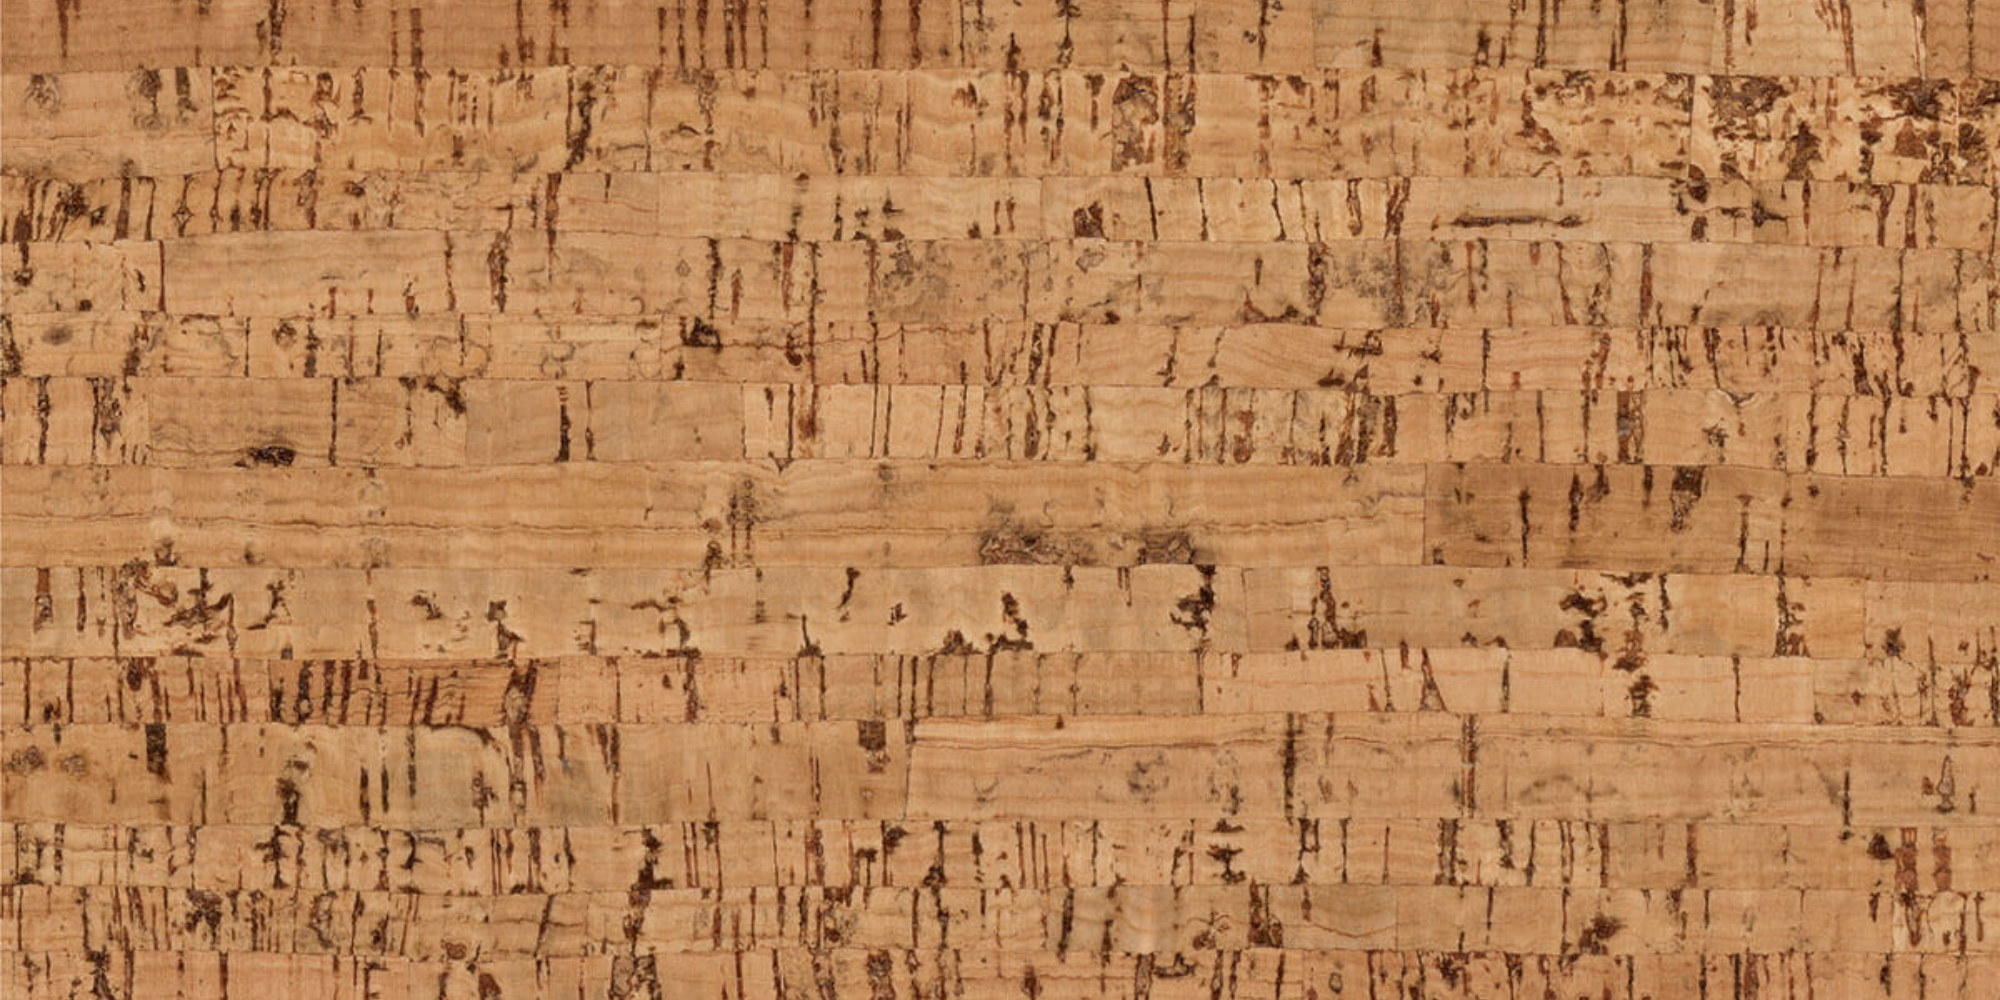 cork floors